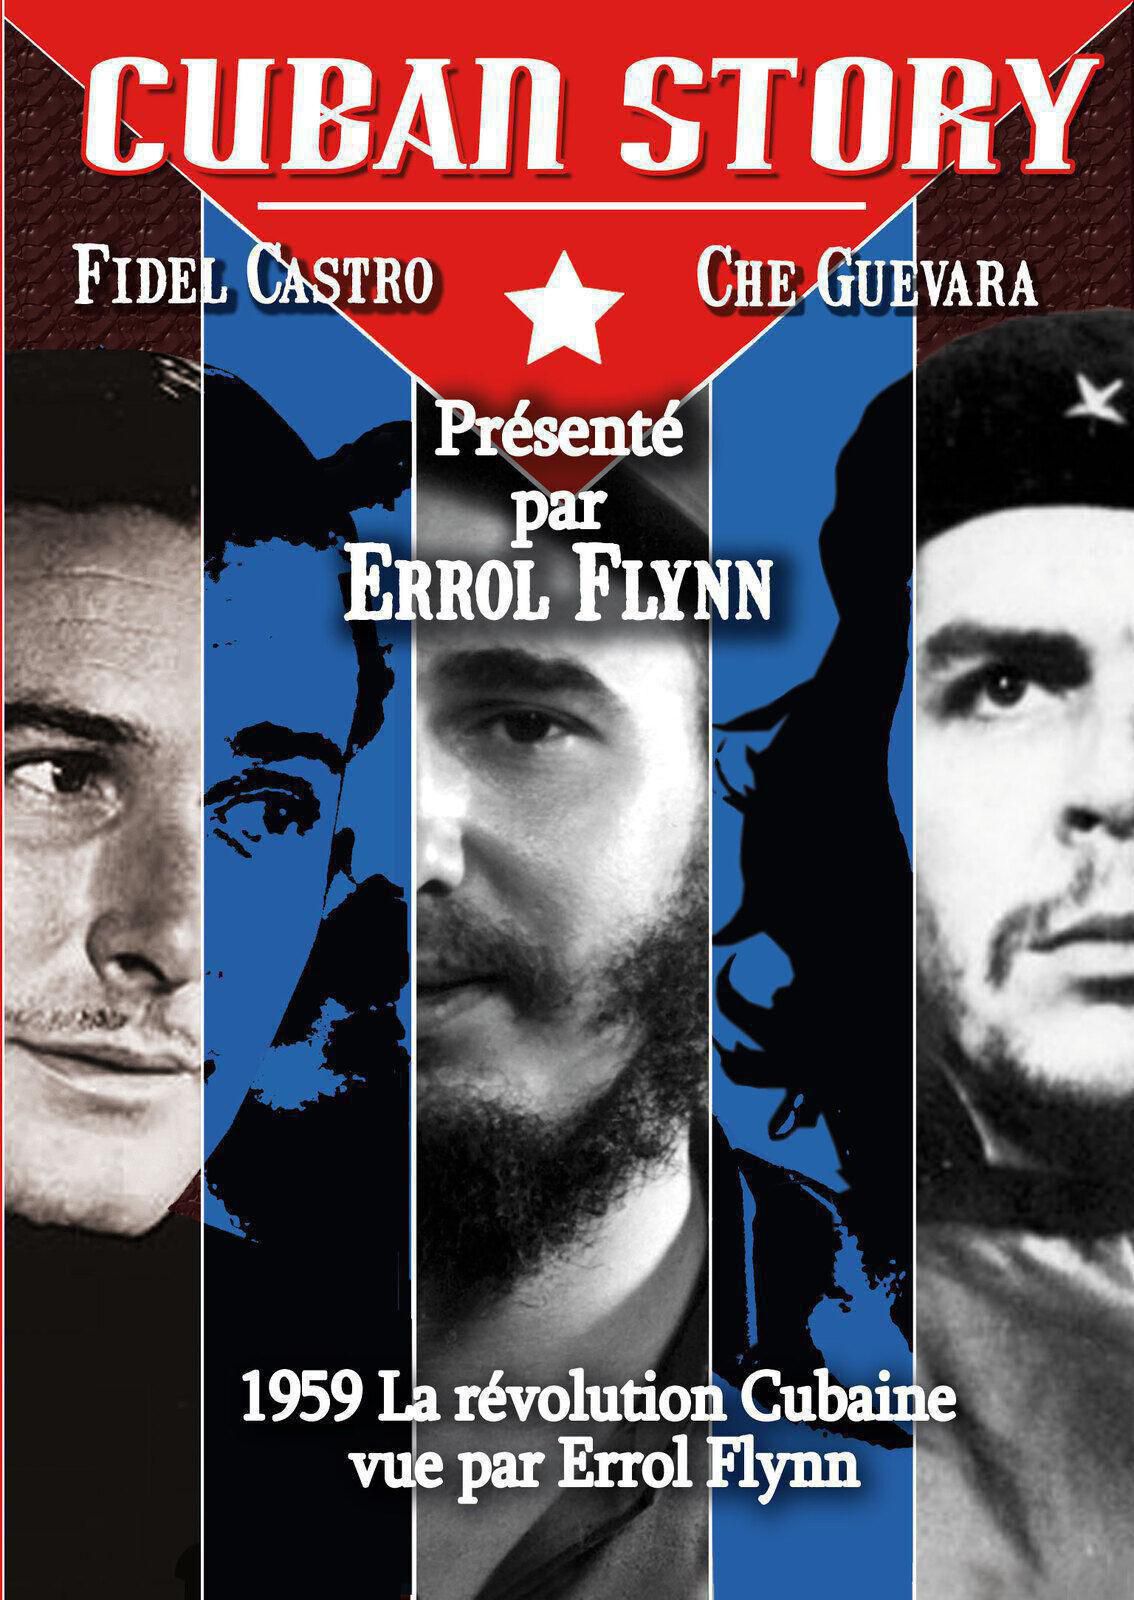 cuban story poster